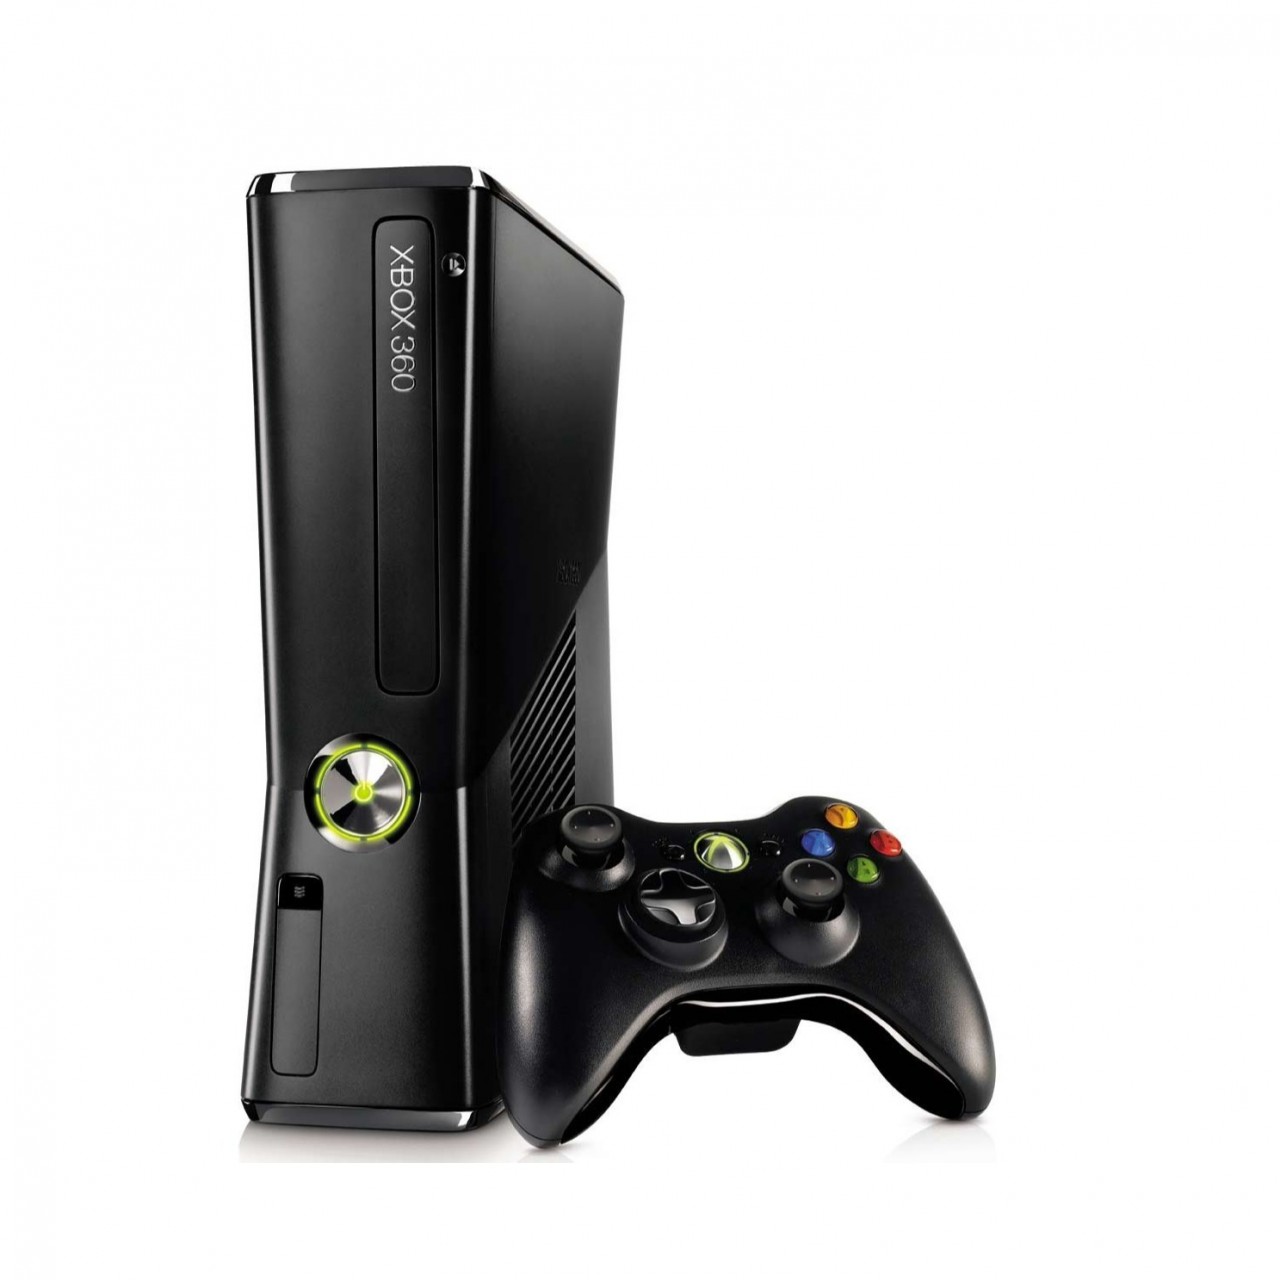 7. Microsoft Xbox 360 Console - 250 GB Storage